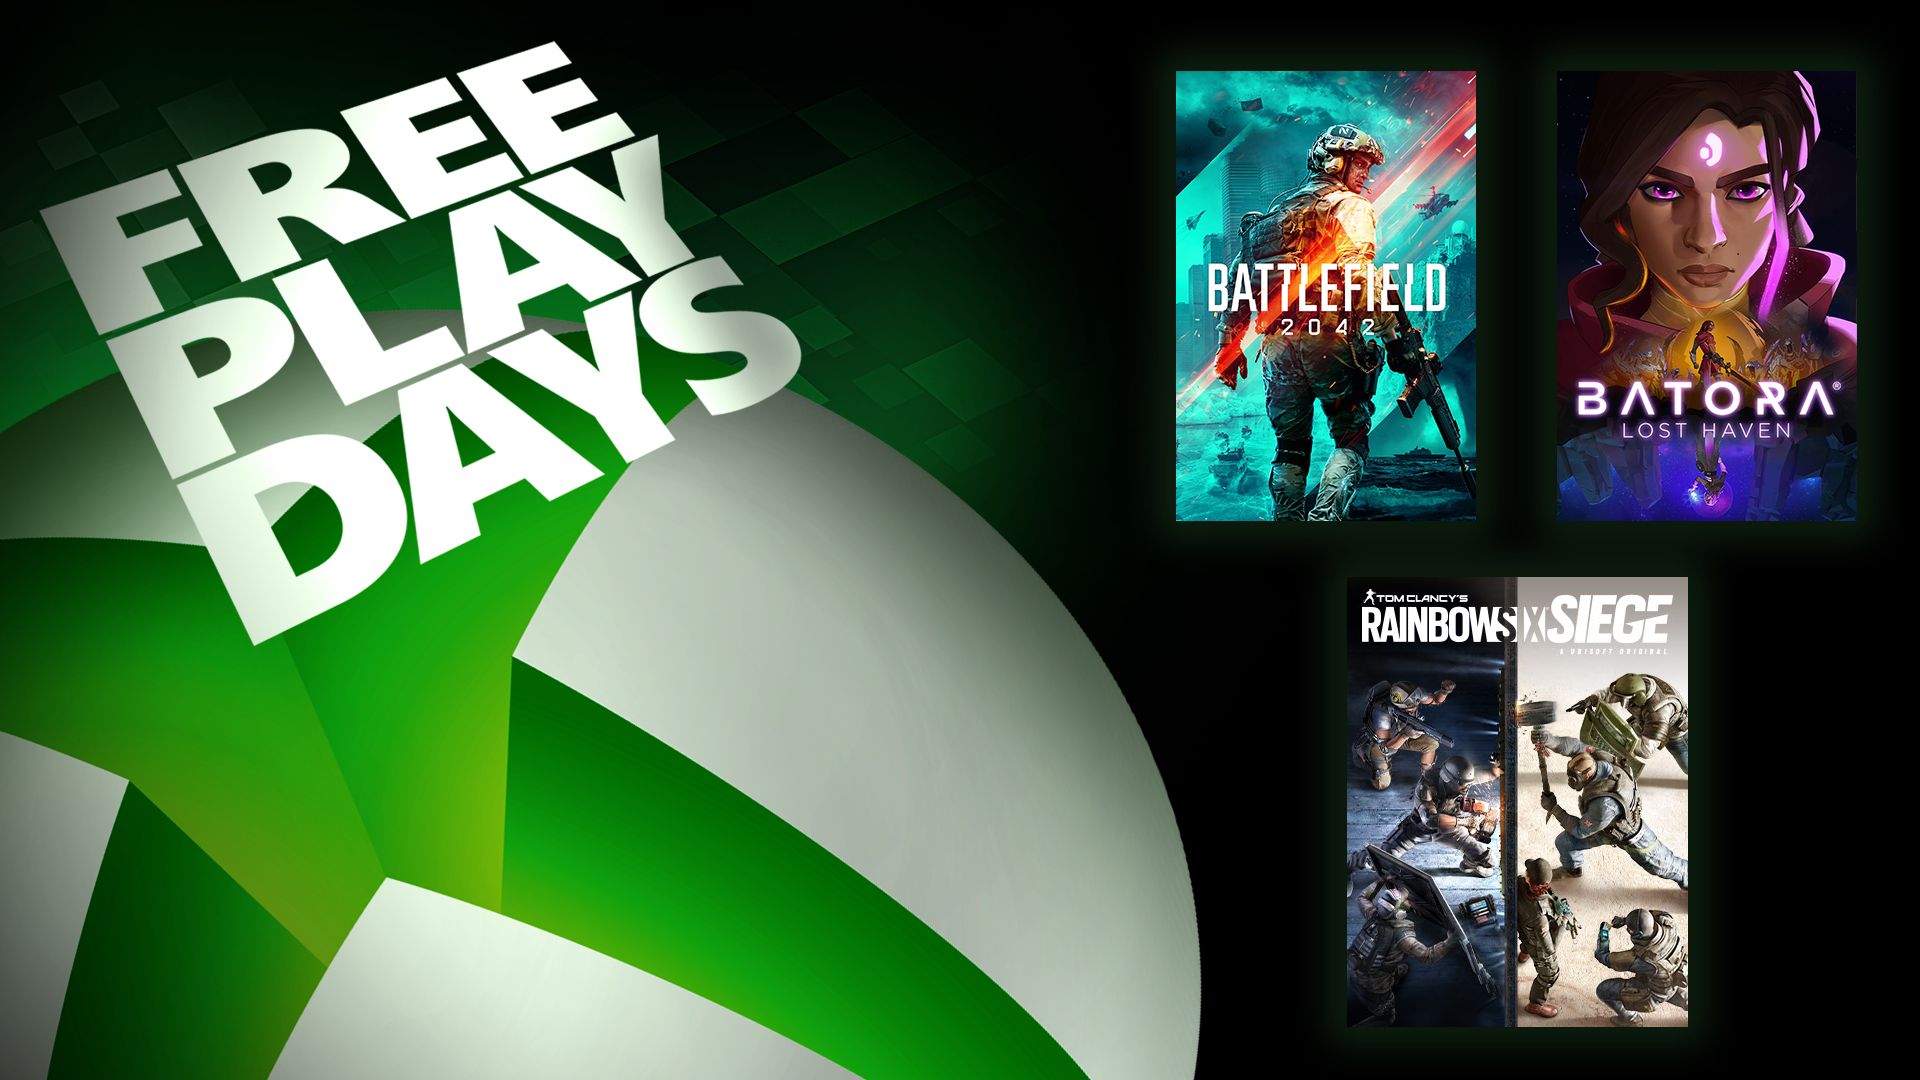 Download Xbox Battlefield 2042 Standard Edition Xbox One Digital Code